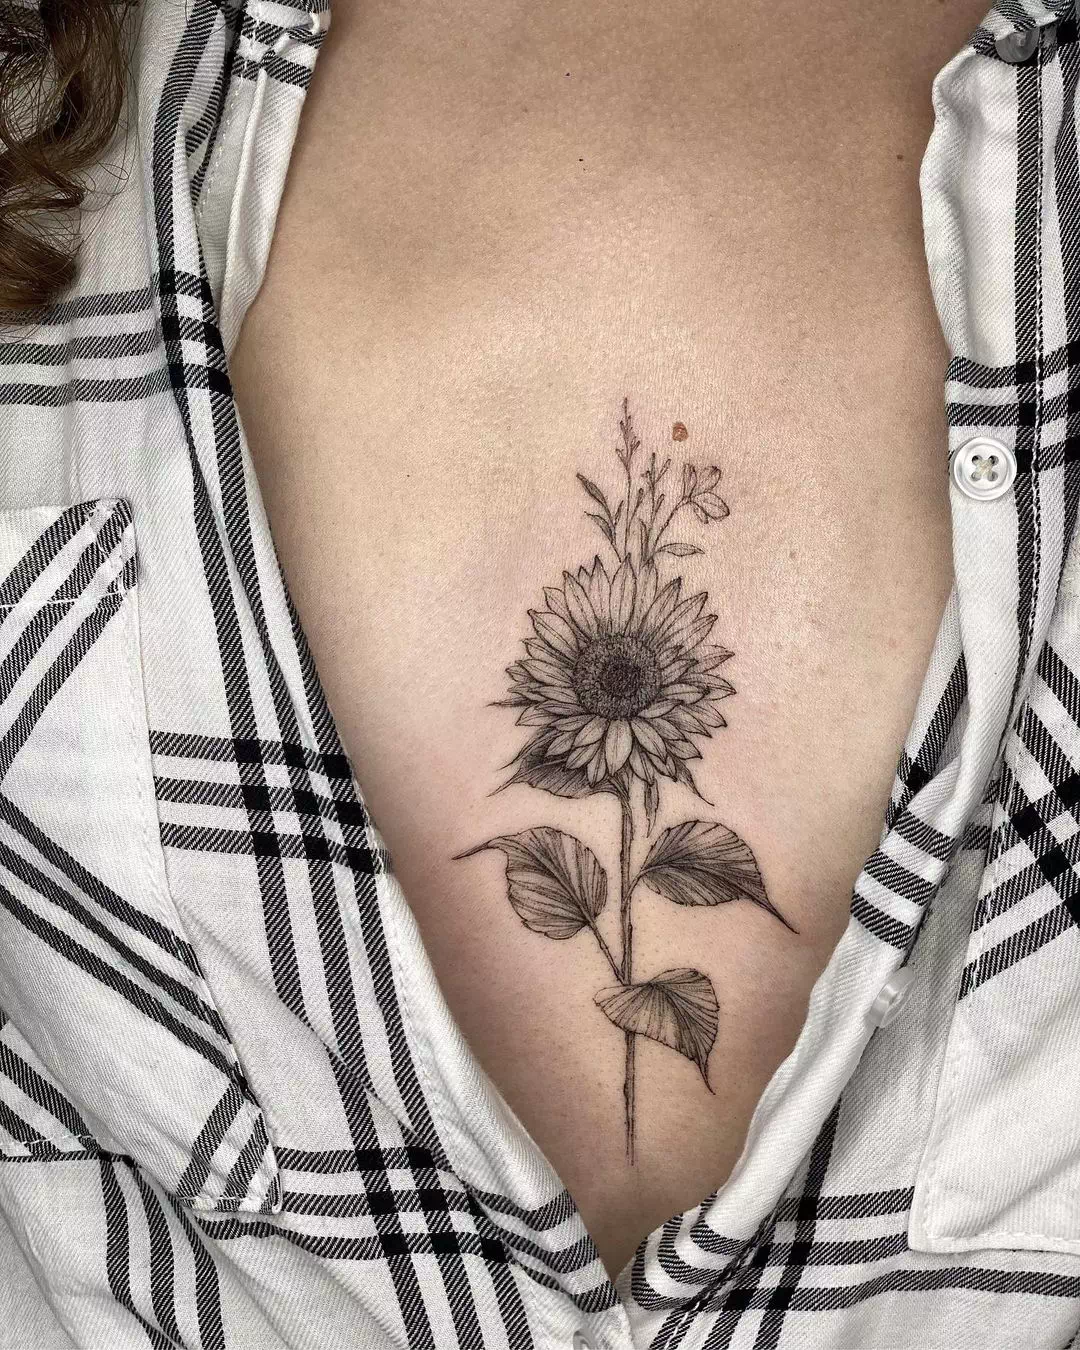 Black Sunflower Tattoo